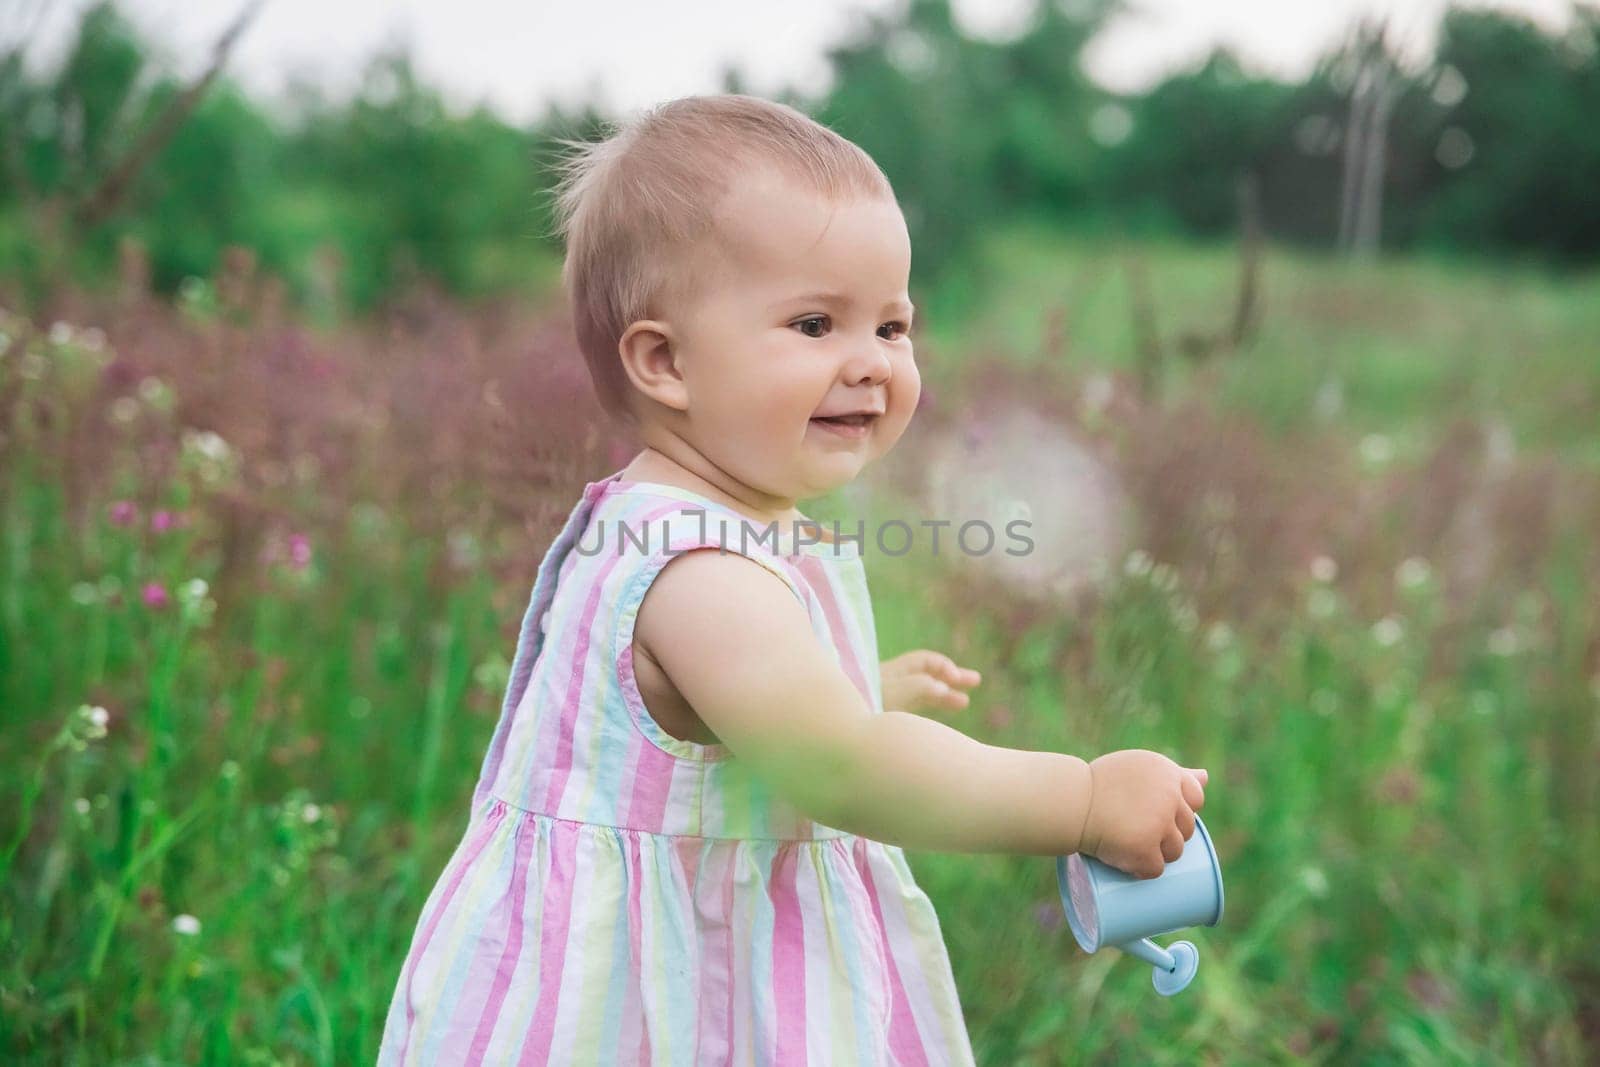 beautiful baby in a striped dress watering flowers in the garden.